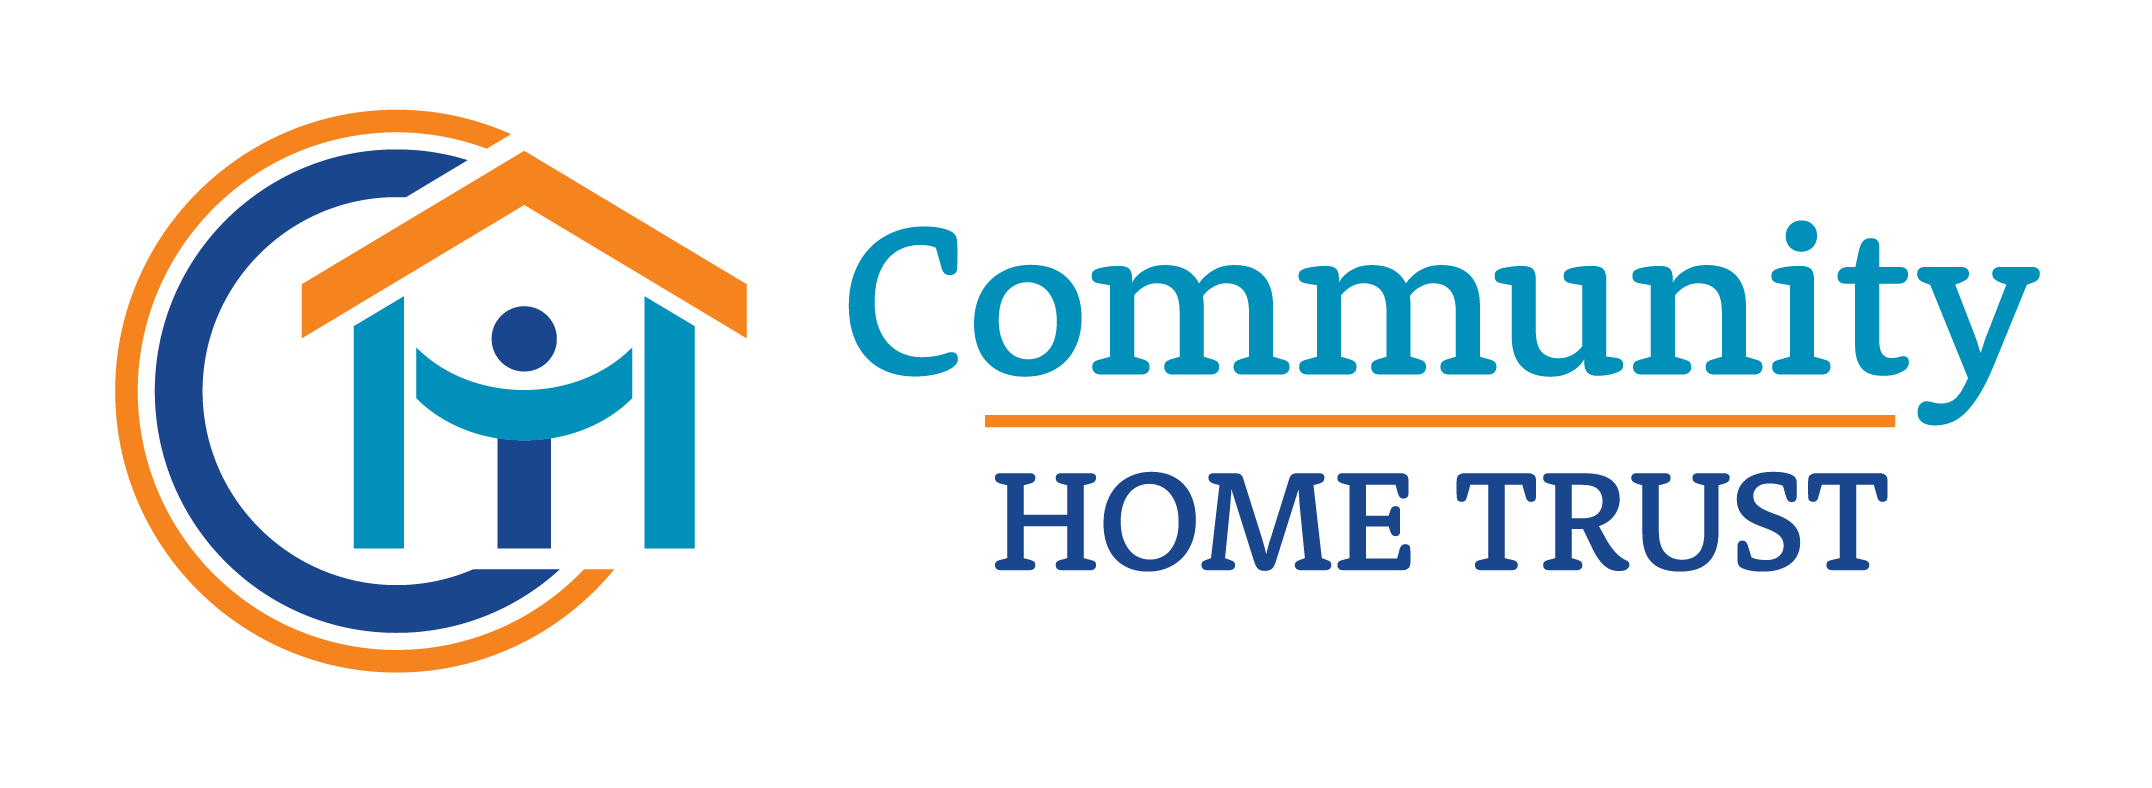 Community Home Trust Logo